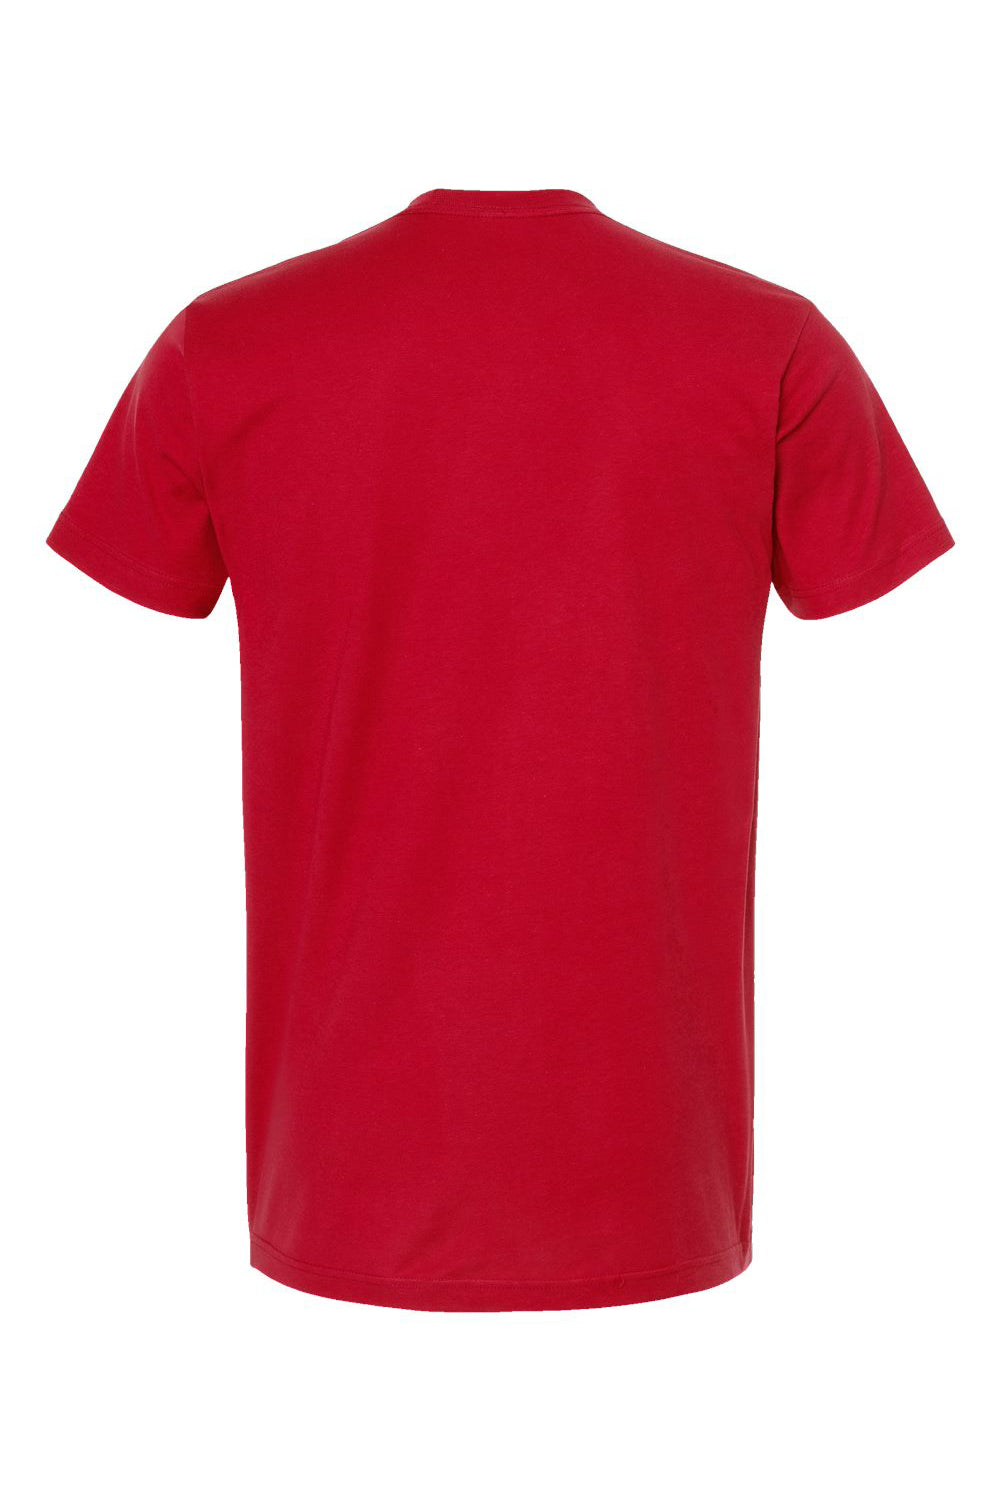 Tultex 202 Mens Fine Jersey Short Sleeve Crewneck T-Shirt Red Flat Back